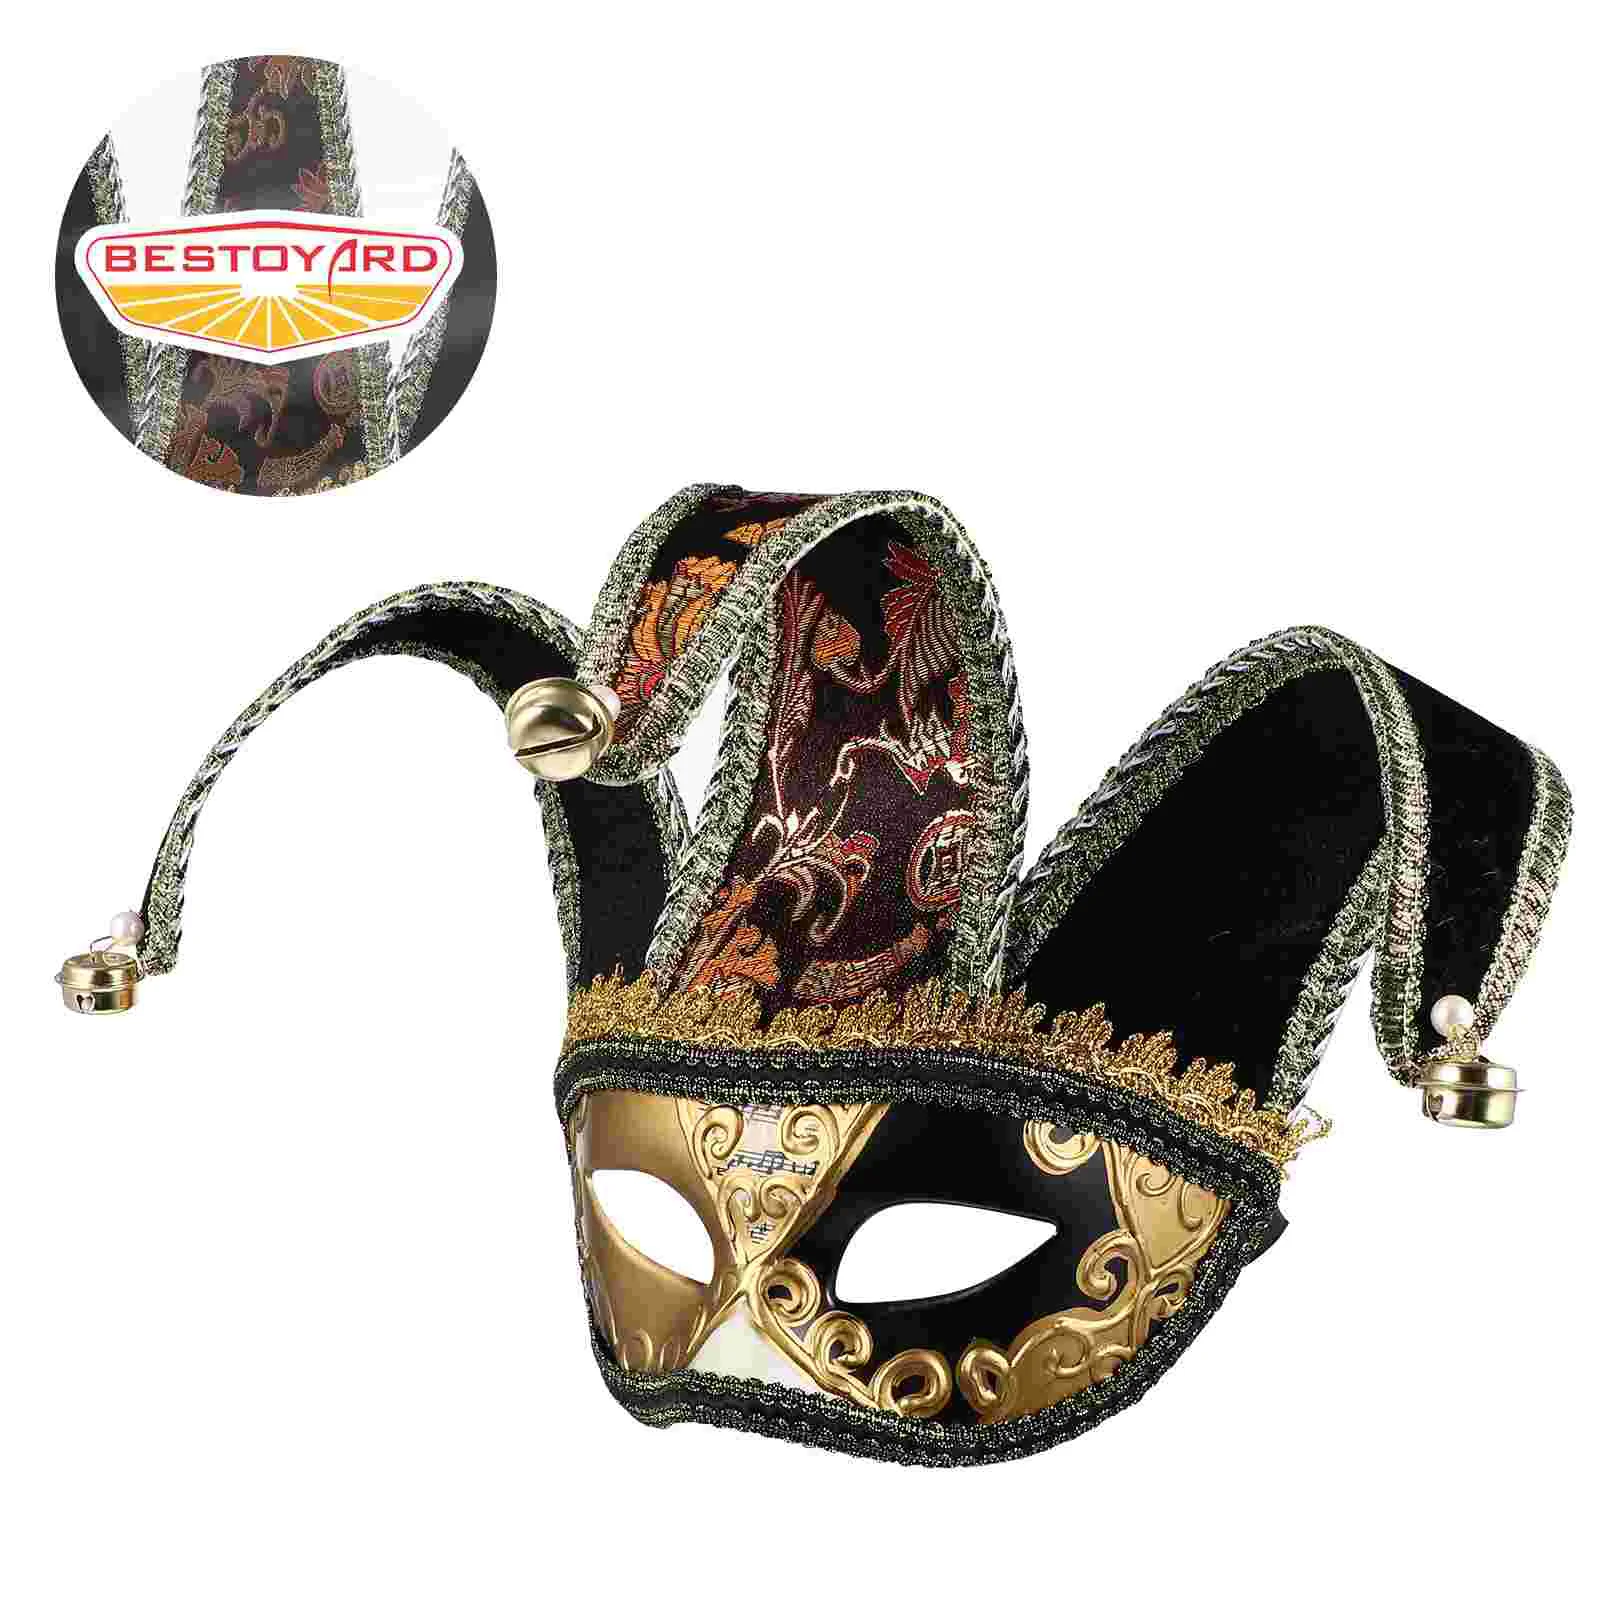 Adult Fancy Dress Carnival Half Face Mask Venetian Decor Prom Supplies Men Women Cosplay